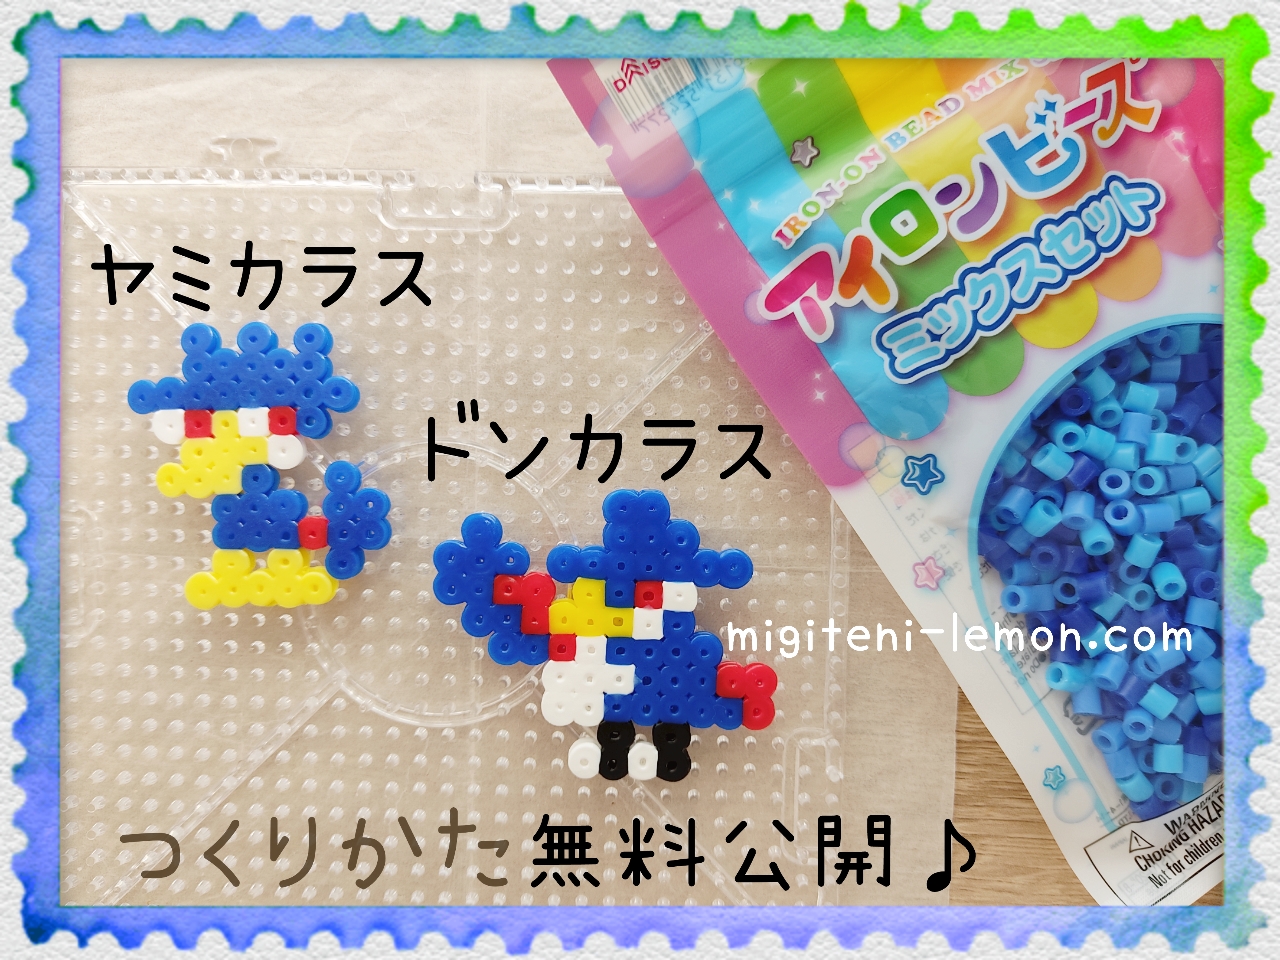 yamikarasu-murkrow-donkarasu-honchkrow-pokemon-free-beads-zuan